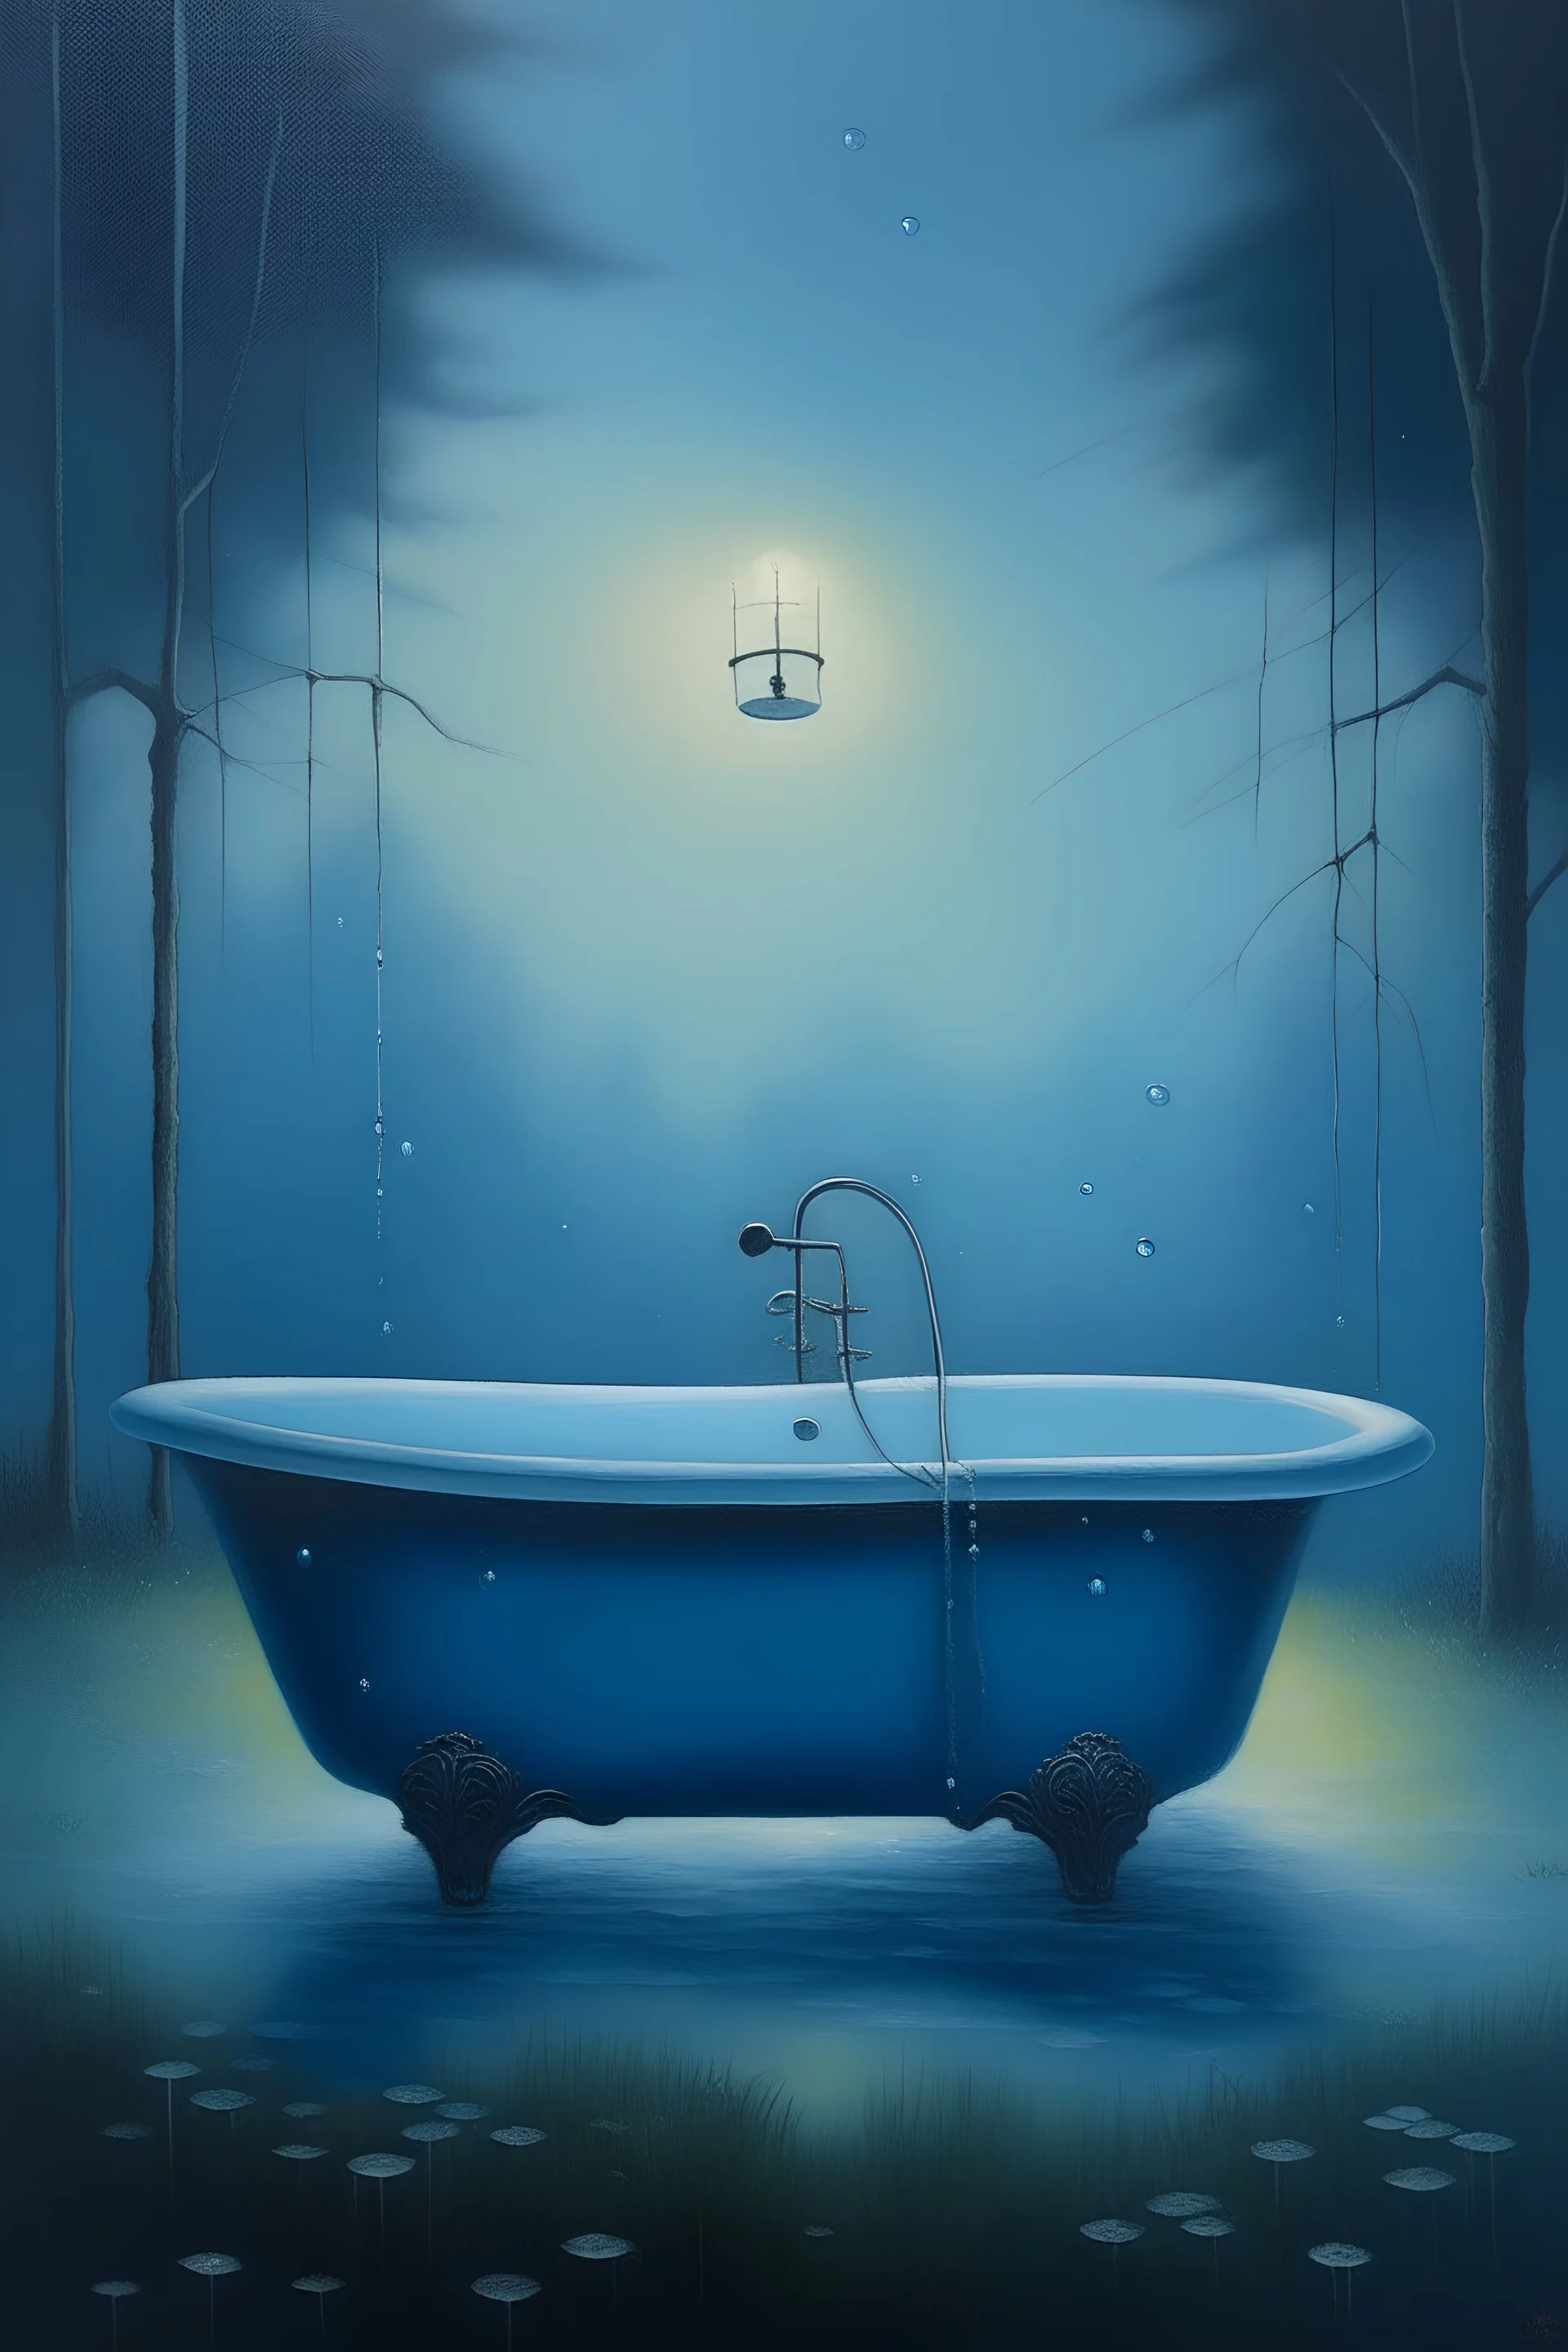 an oil painting of a bathtub in a blue foggy bathroom with fireflies